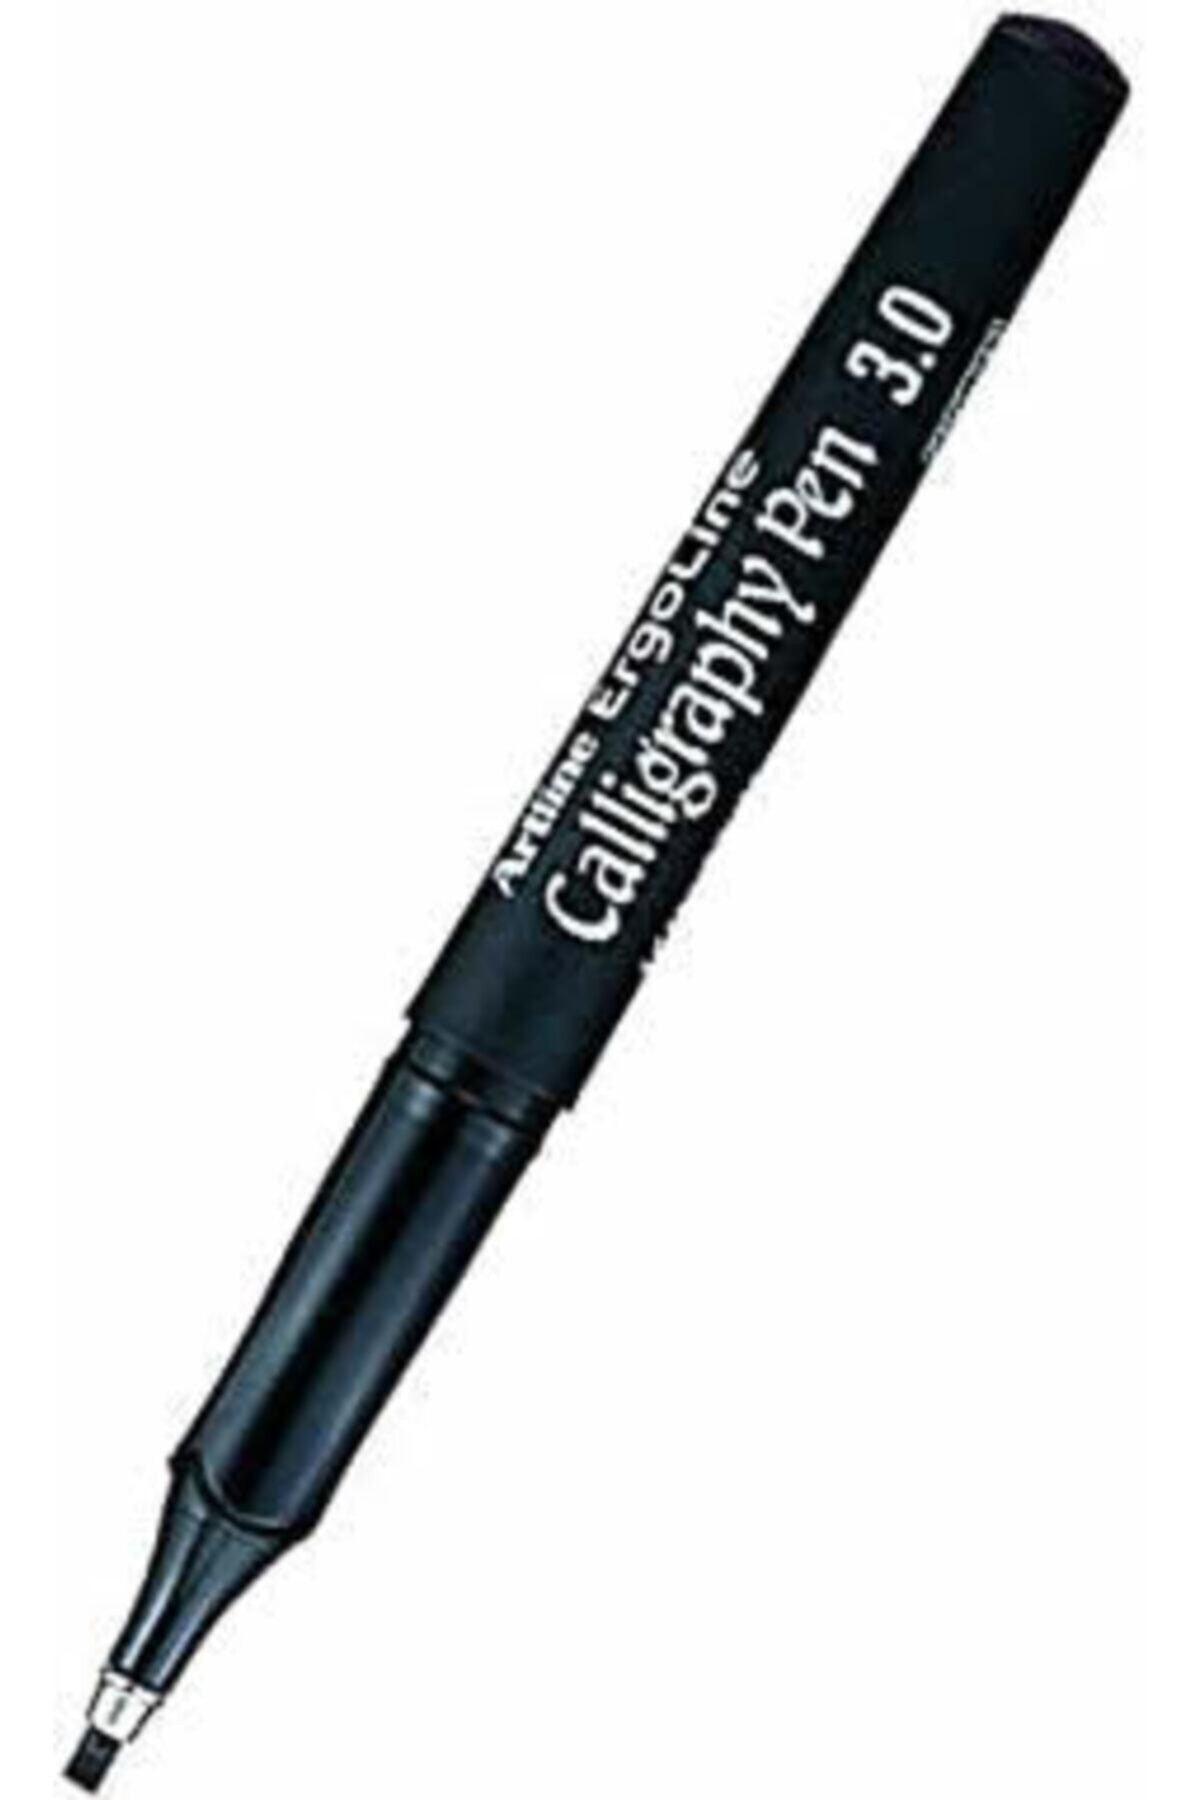 Artline 3.0 Mm Black Calligraphy Pen